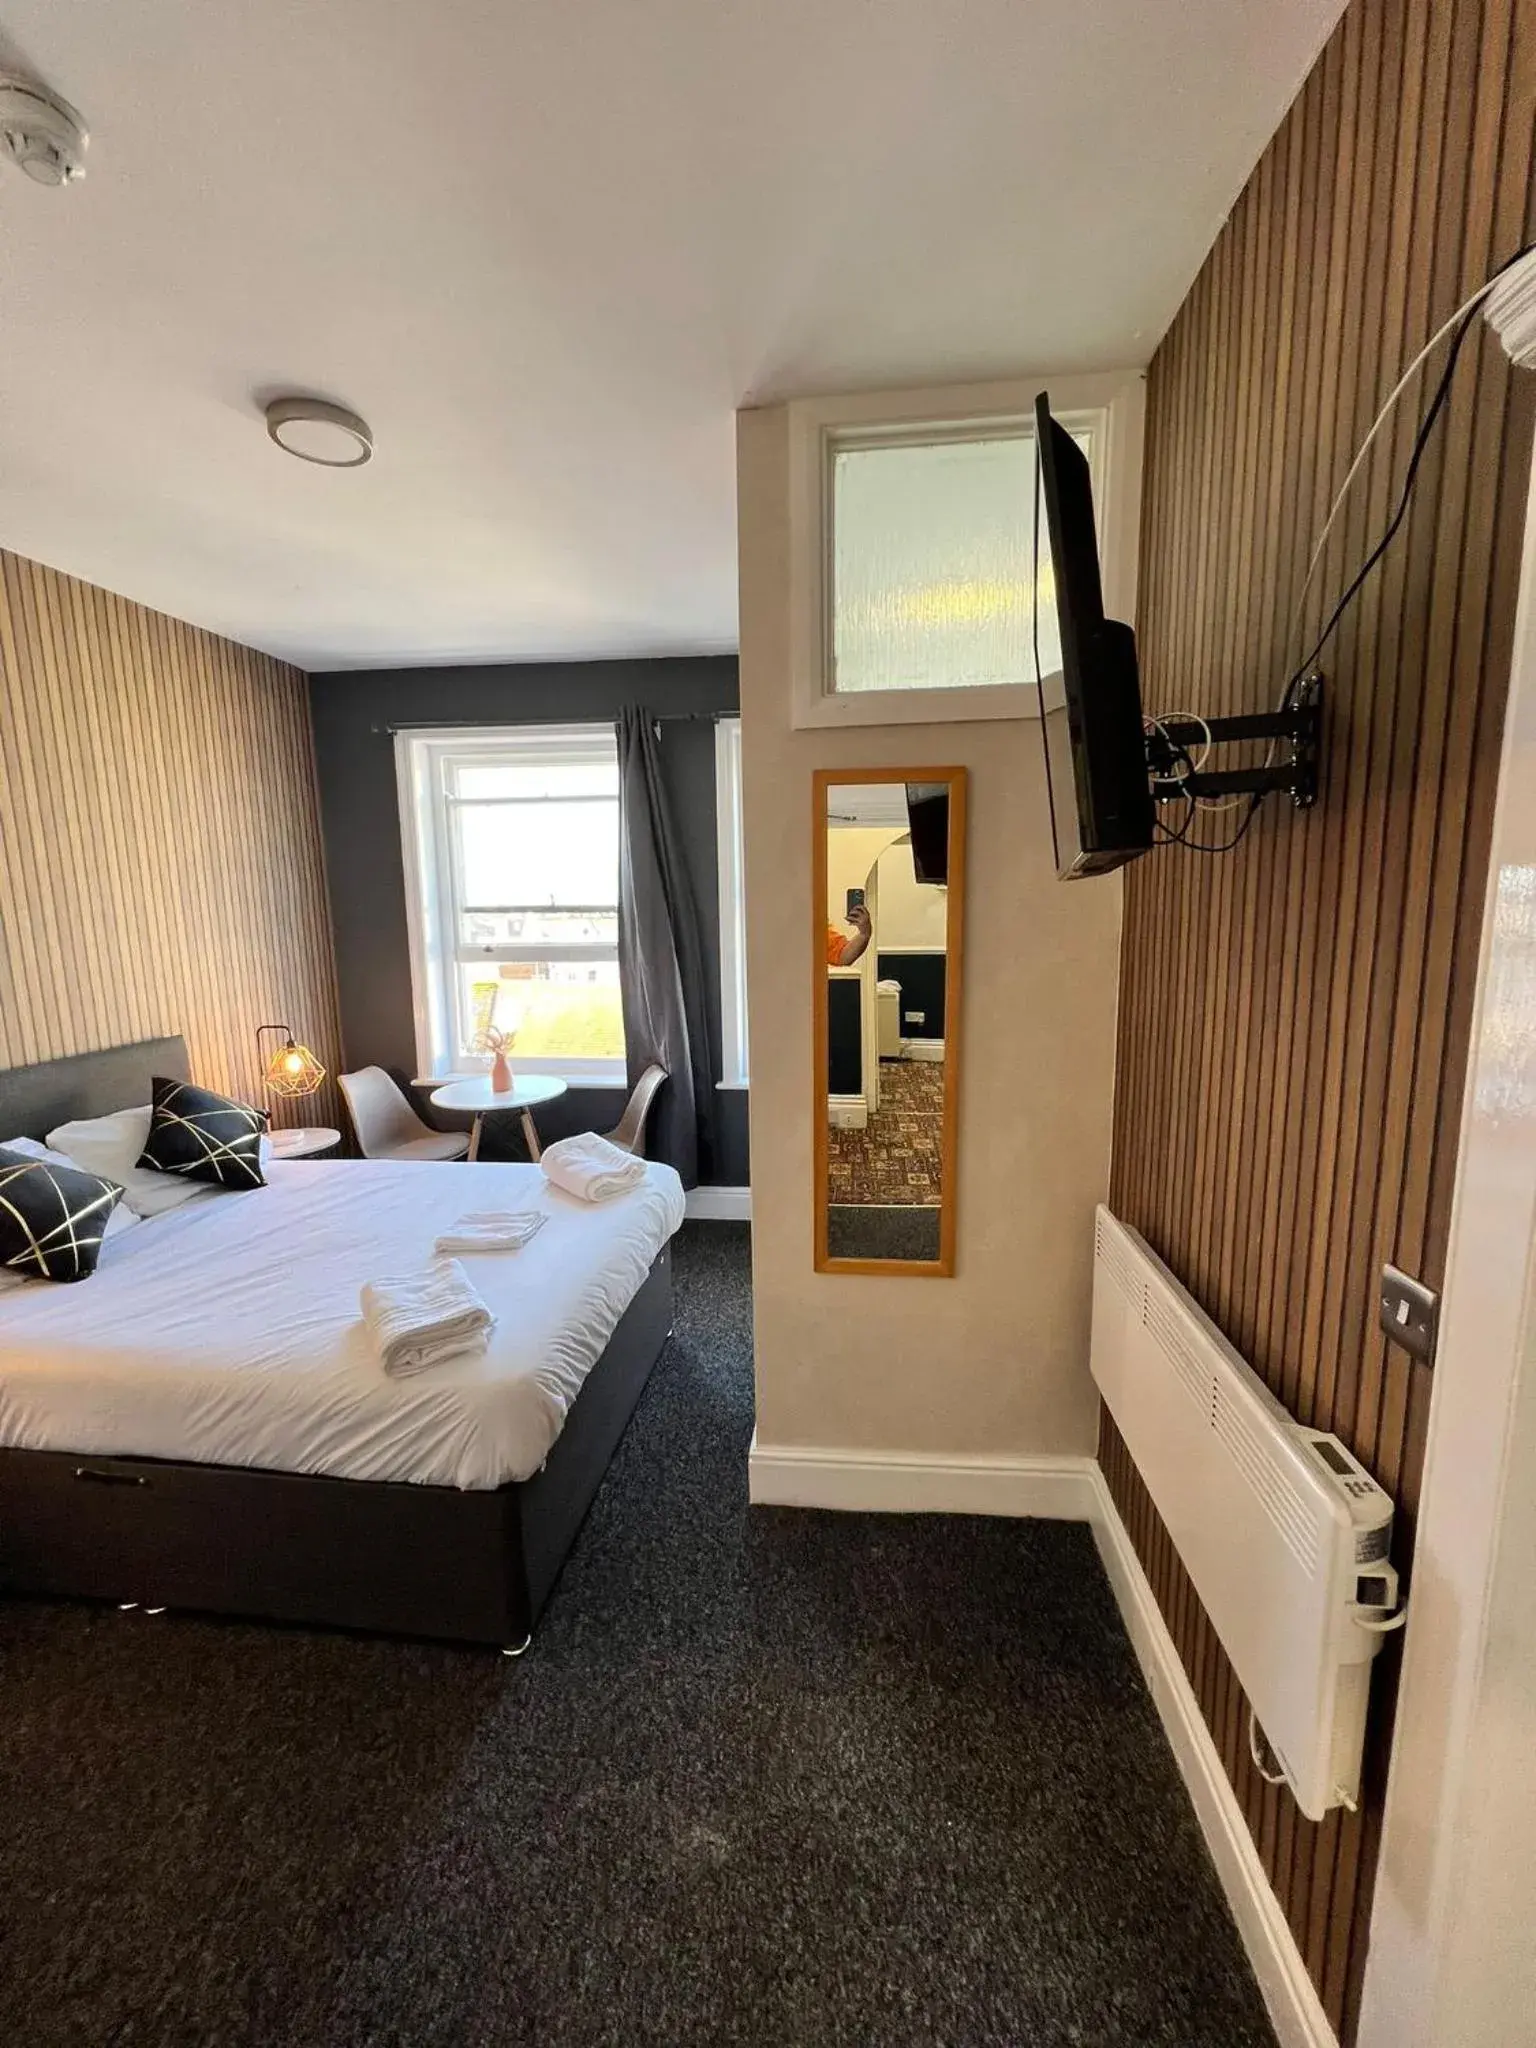 Bedroom in OYO Marine Parade Hotel, Eastbourne Pier